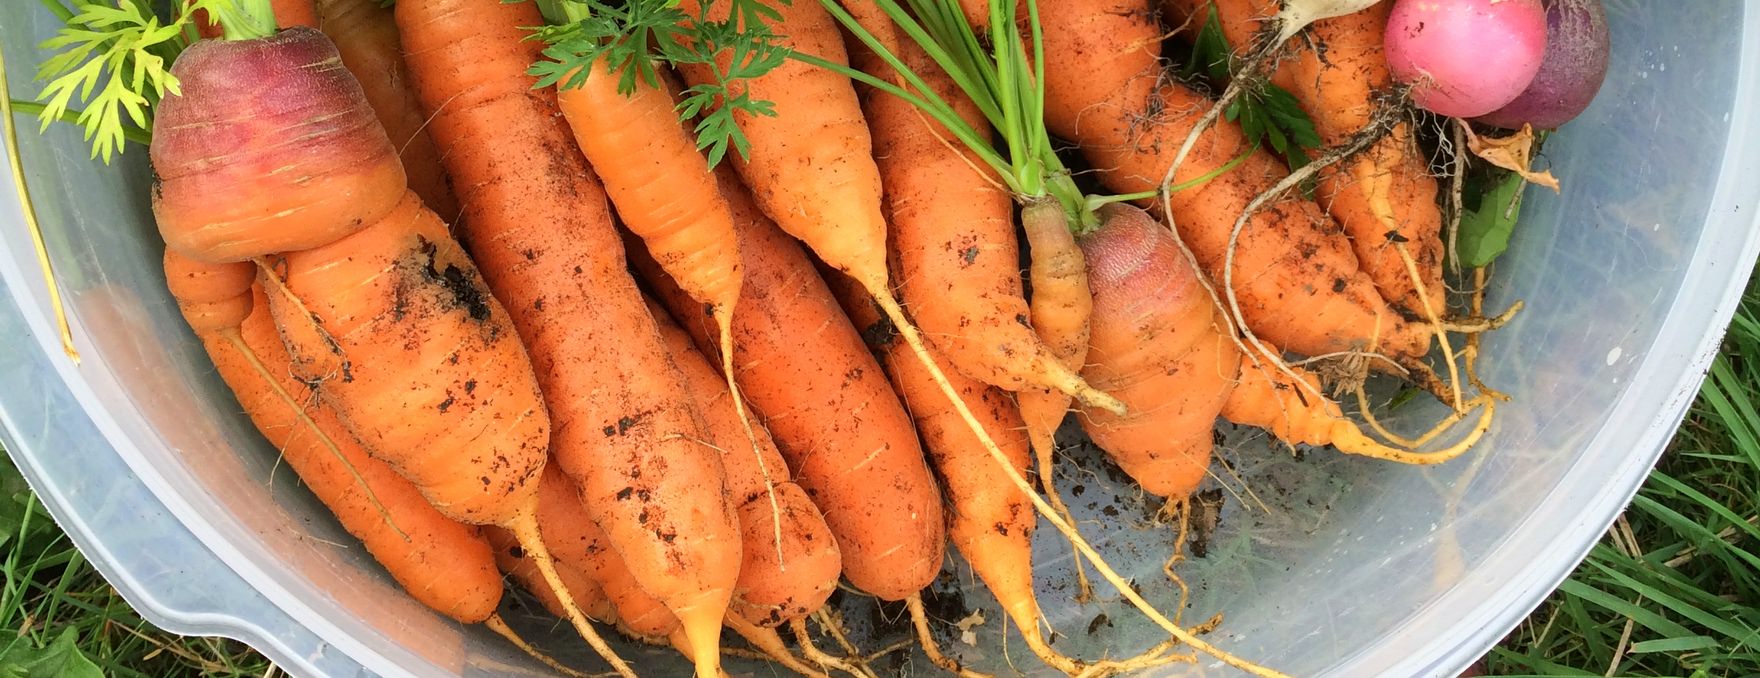 Ugly healthy orange carrots